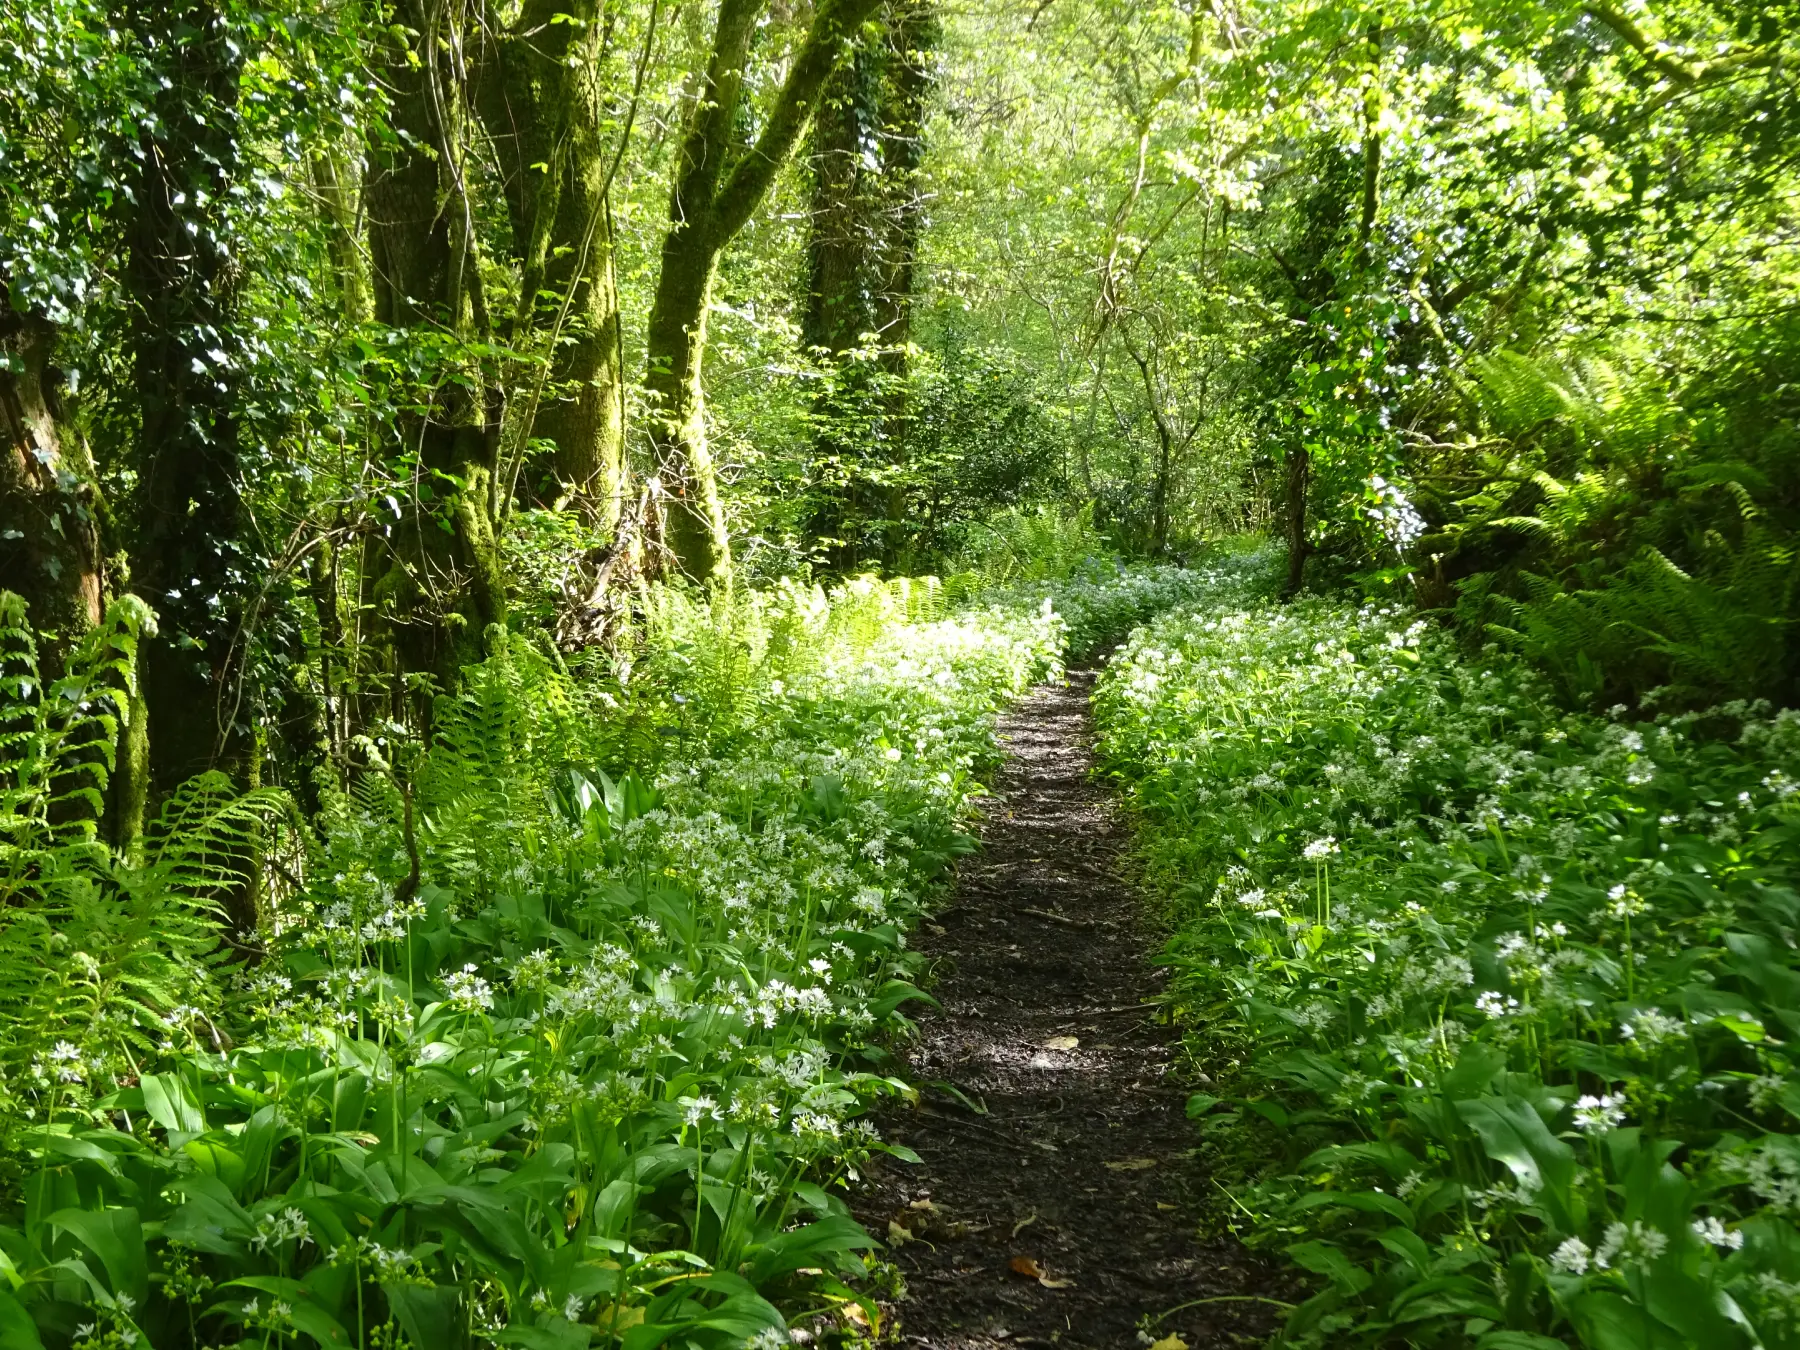 Wild garlic flanks the path through Buttspill Wood